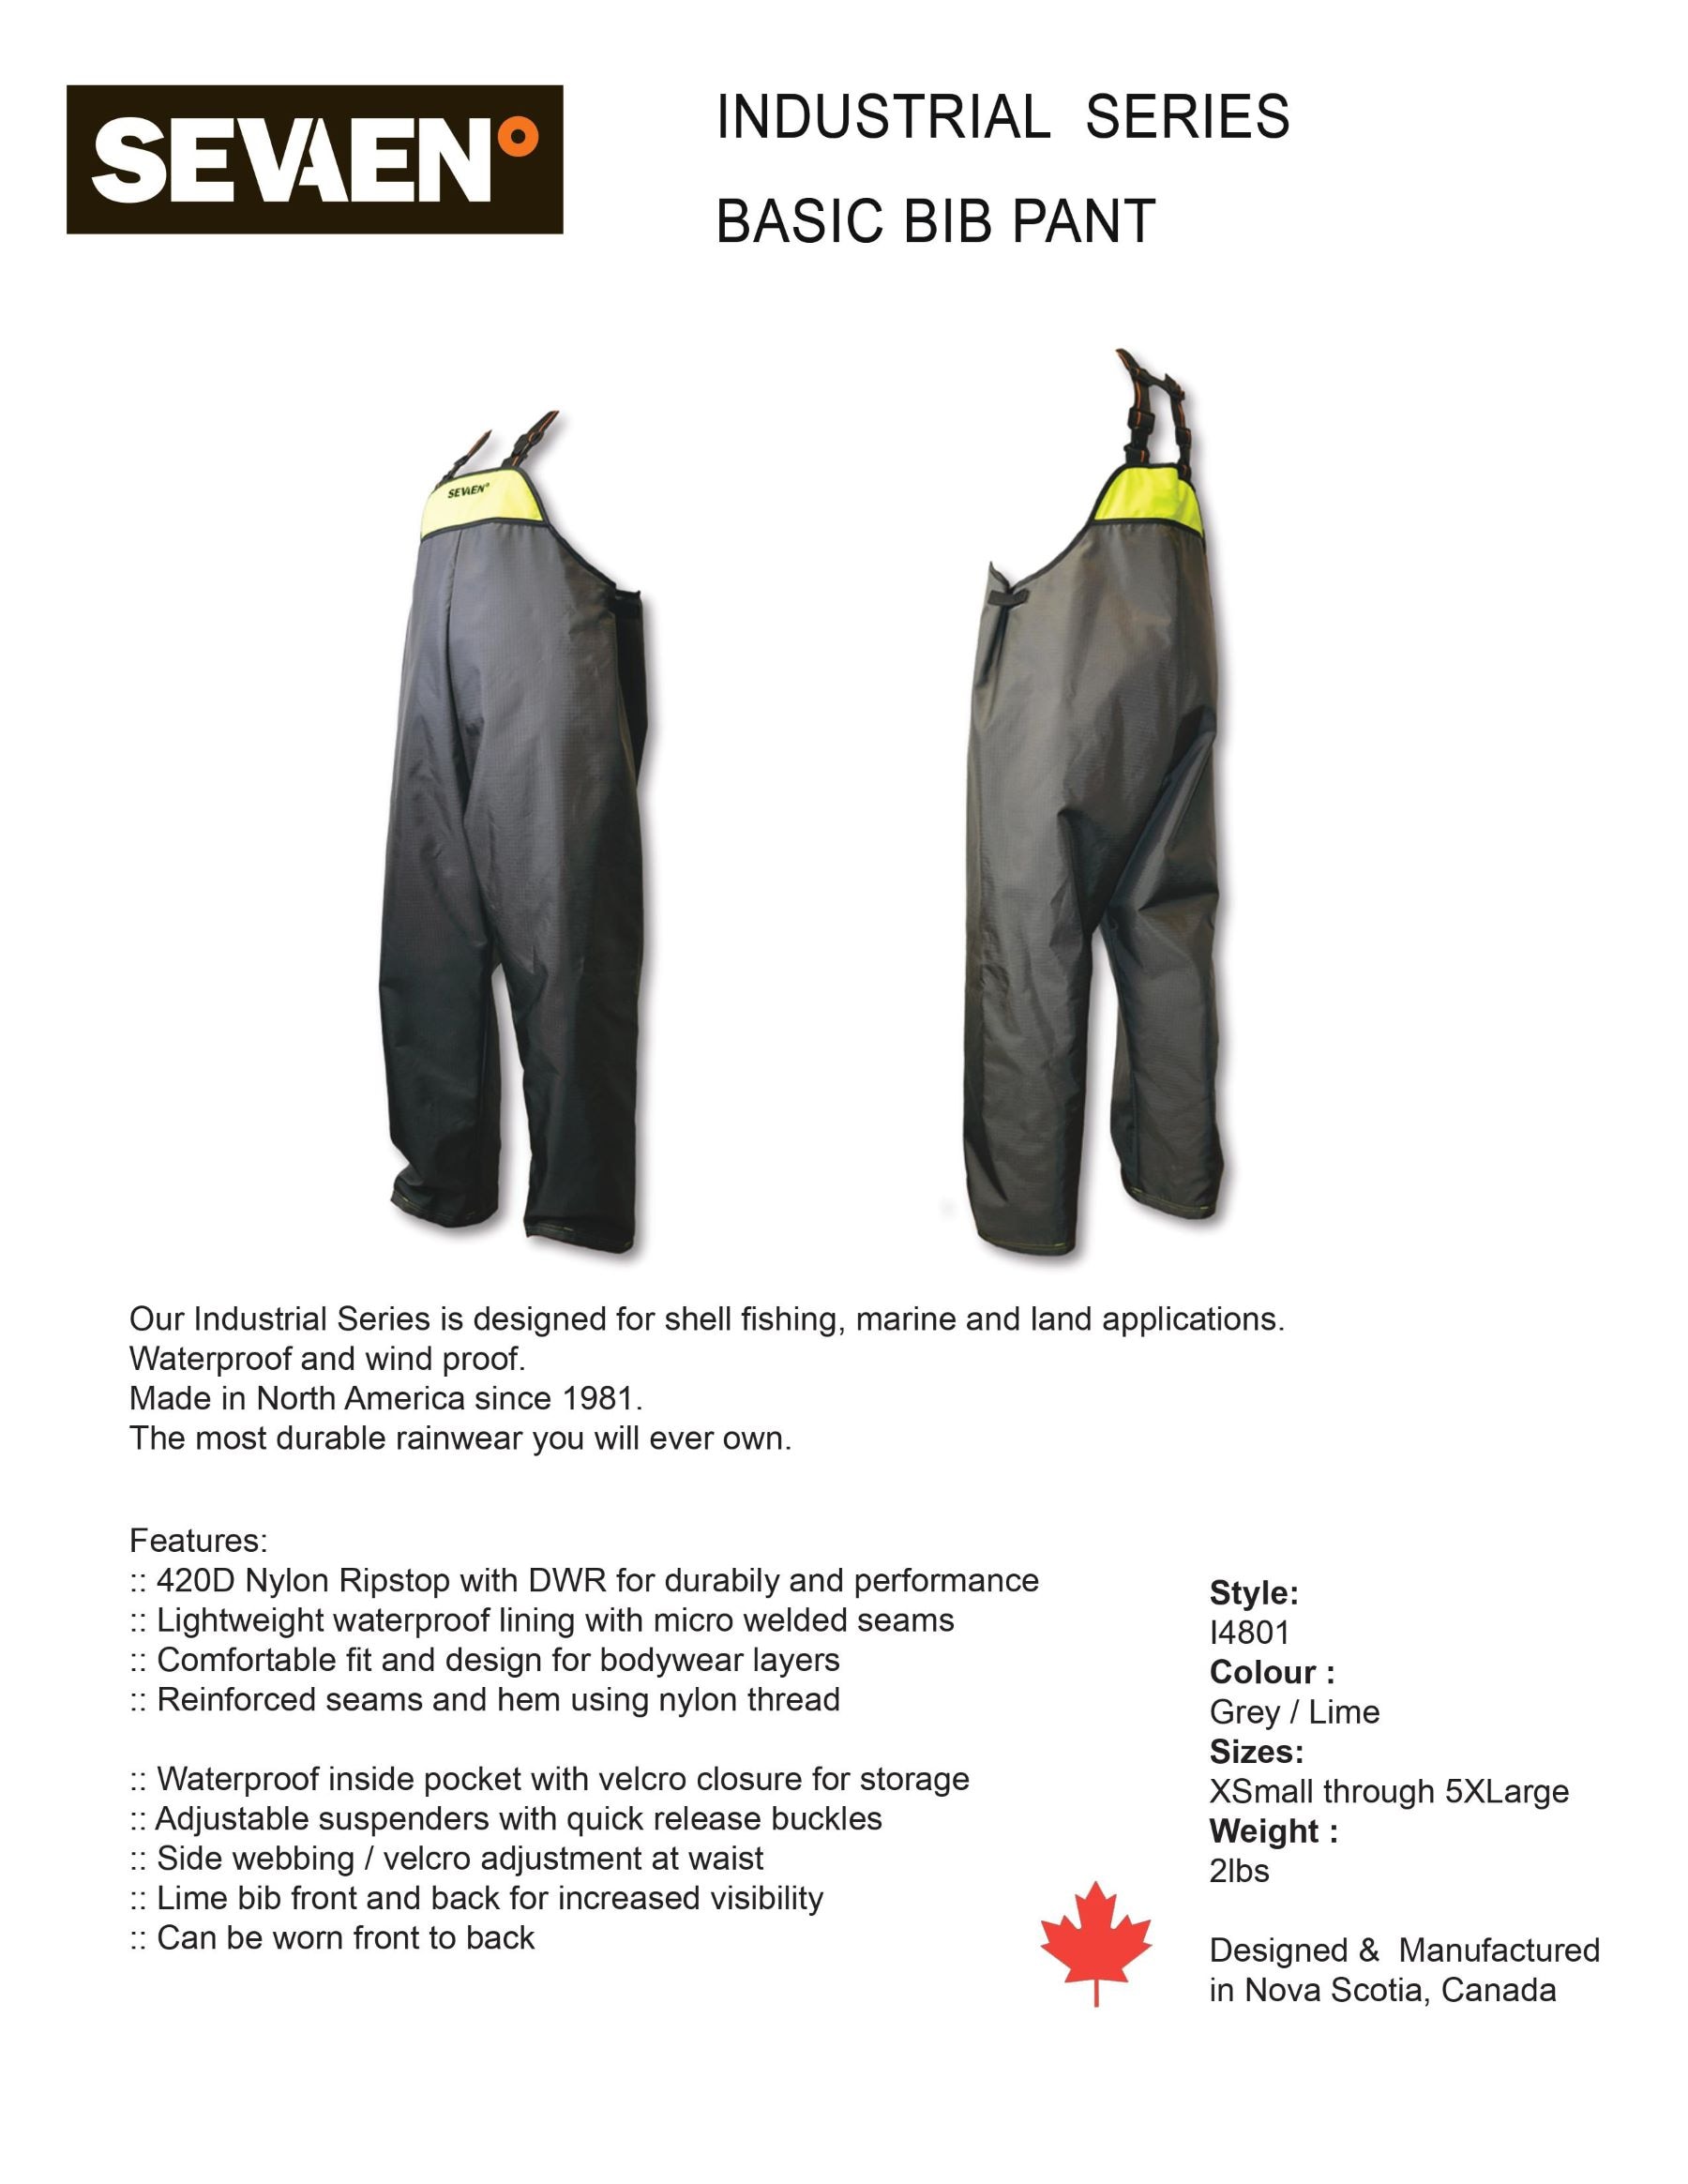 Sevaen Industrial Unisex Adult Medium Bib Pants in the Fishing Gear &  Apparel department at